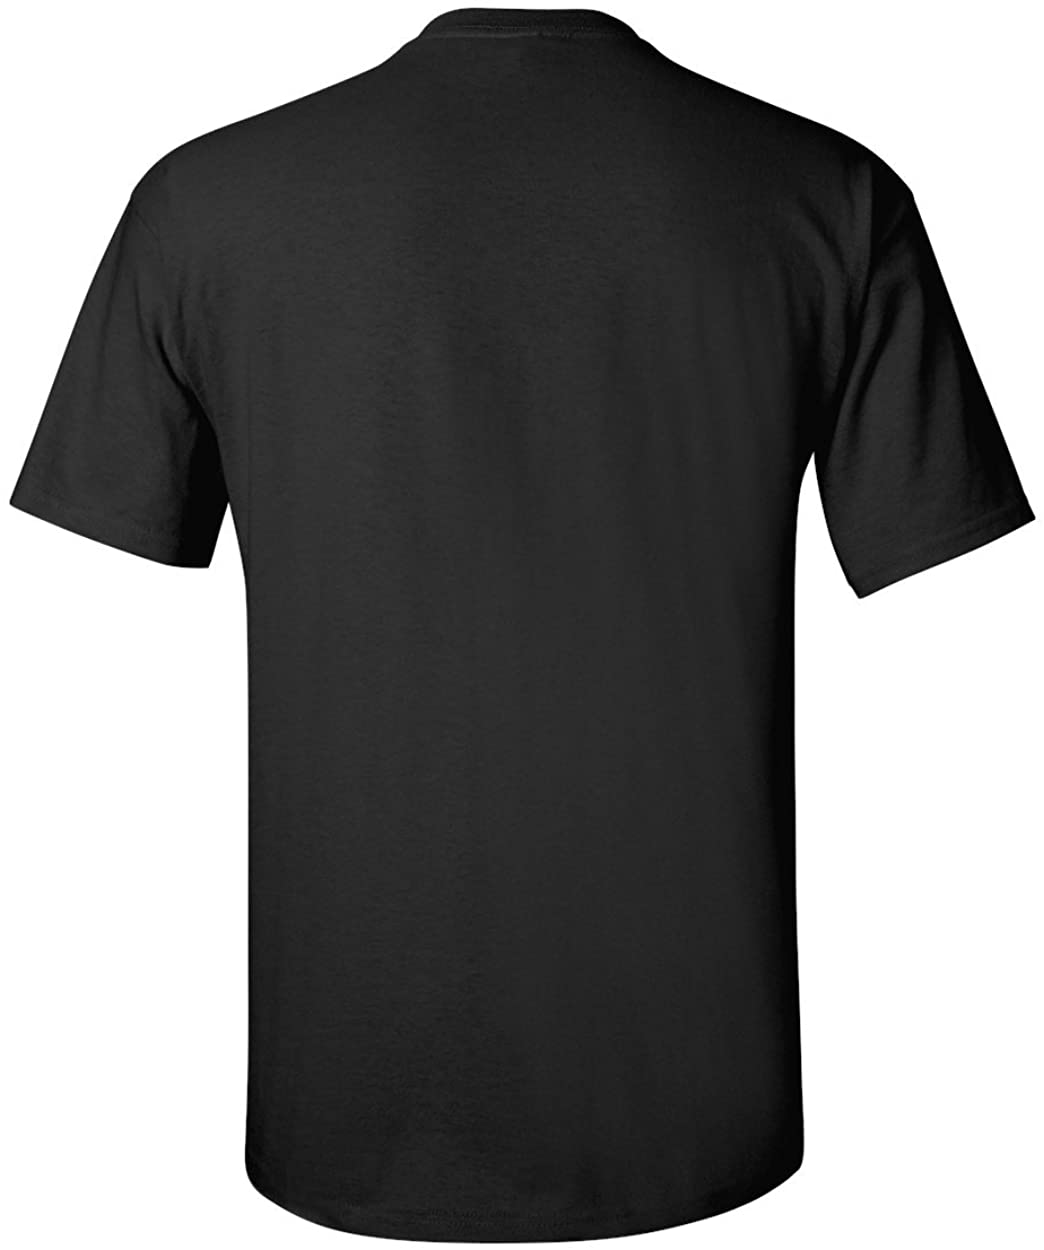 Gildan Activewear Ultra Cotton Tee Shirt. BLACK. M. | eBay